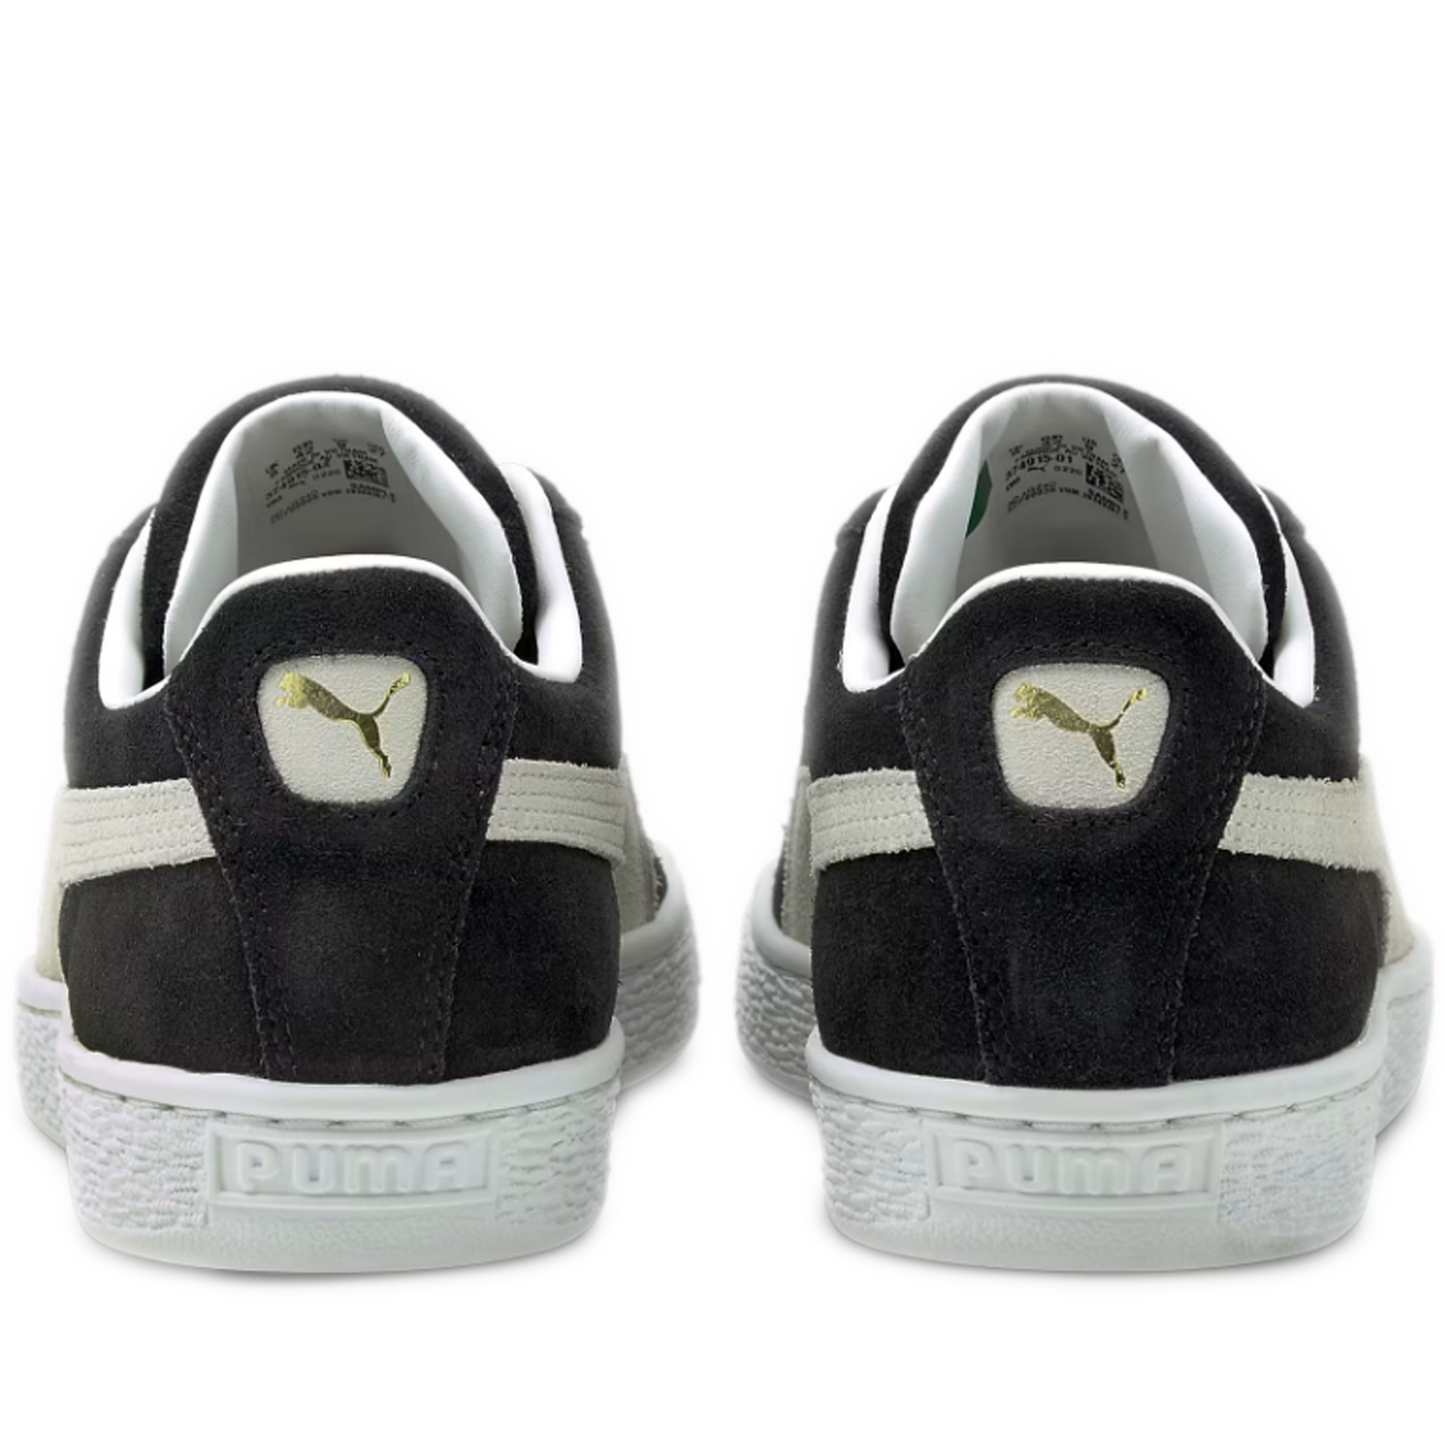 Men's Puma Suede Classic XXI Shoes - Black/ White